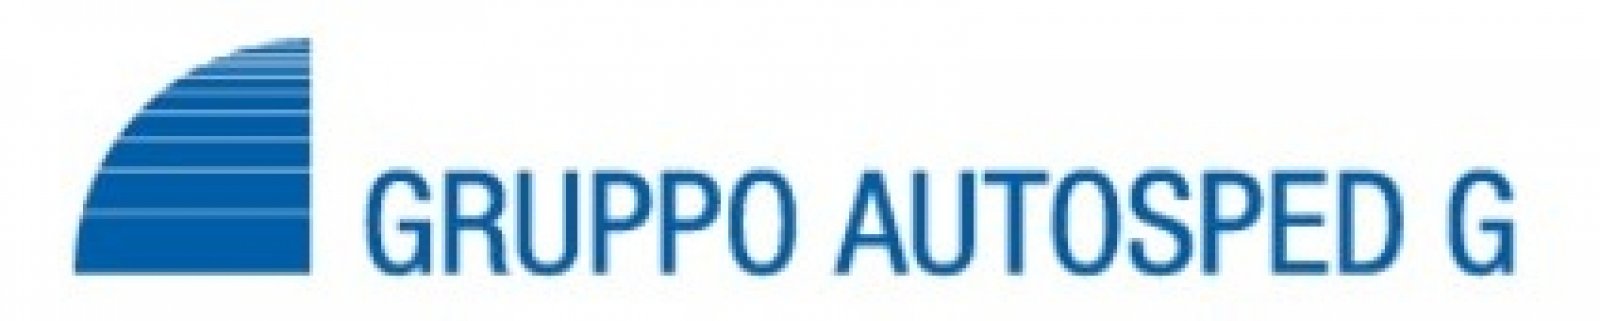 Logo GRUPPO AUTOSPED G SPA